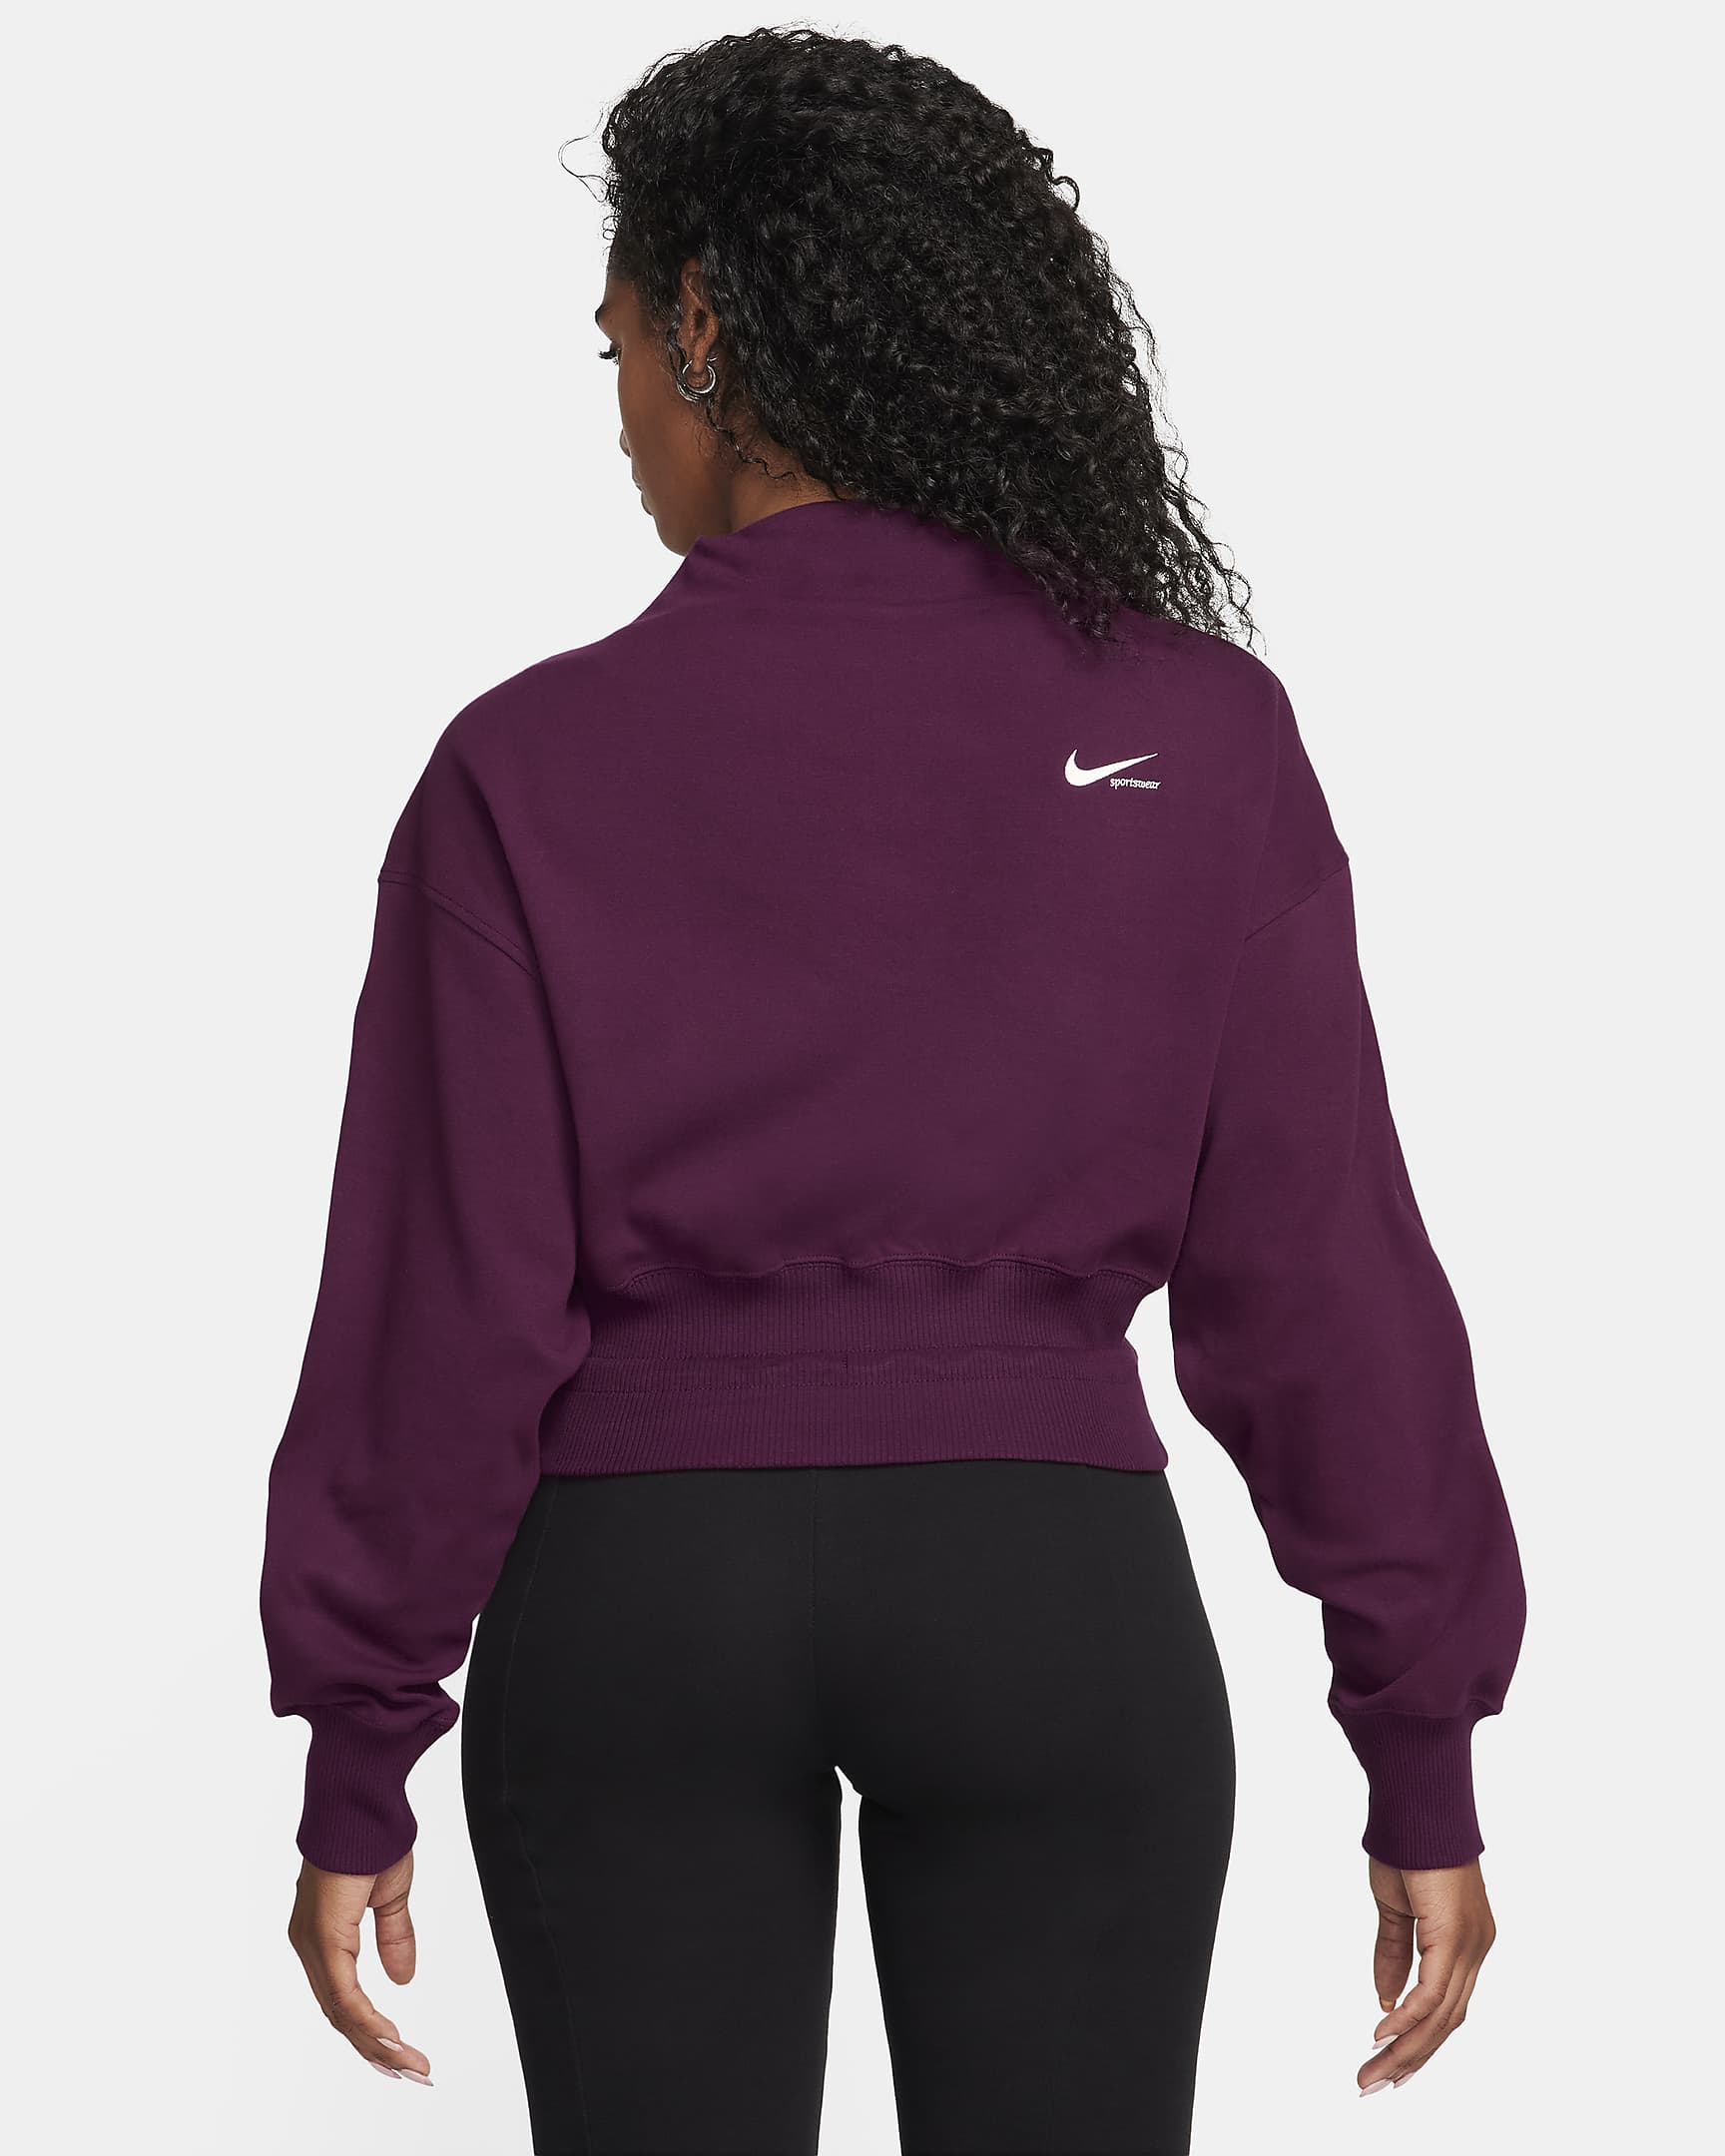 Nike Sportswear Collection Women's Mock-Neck Top. Nike BG